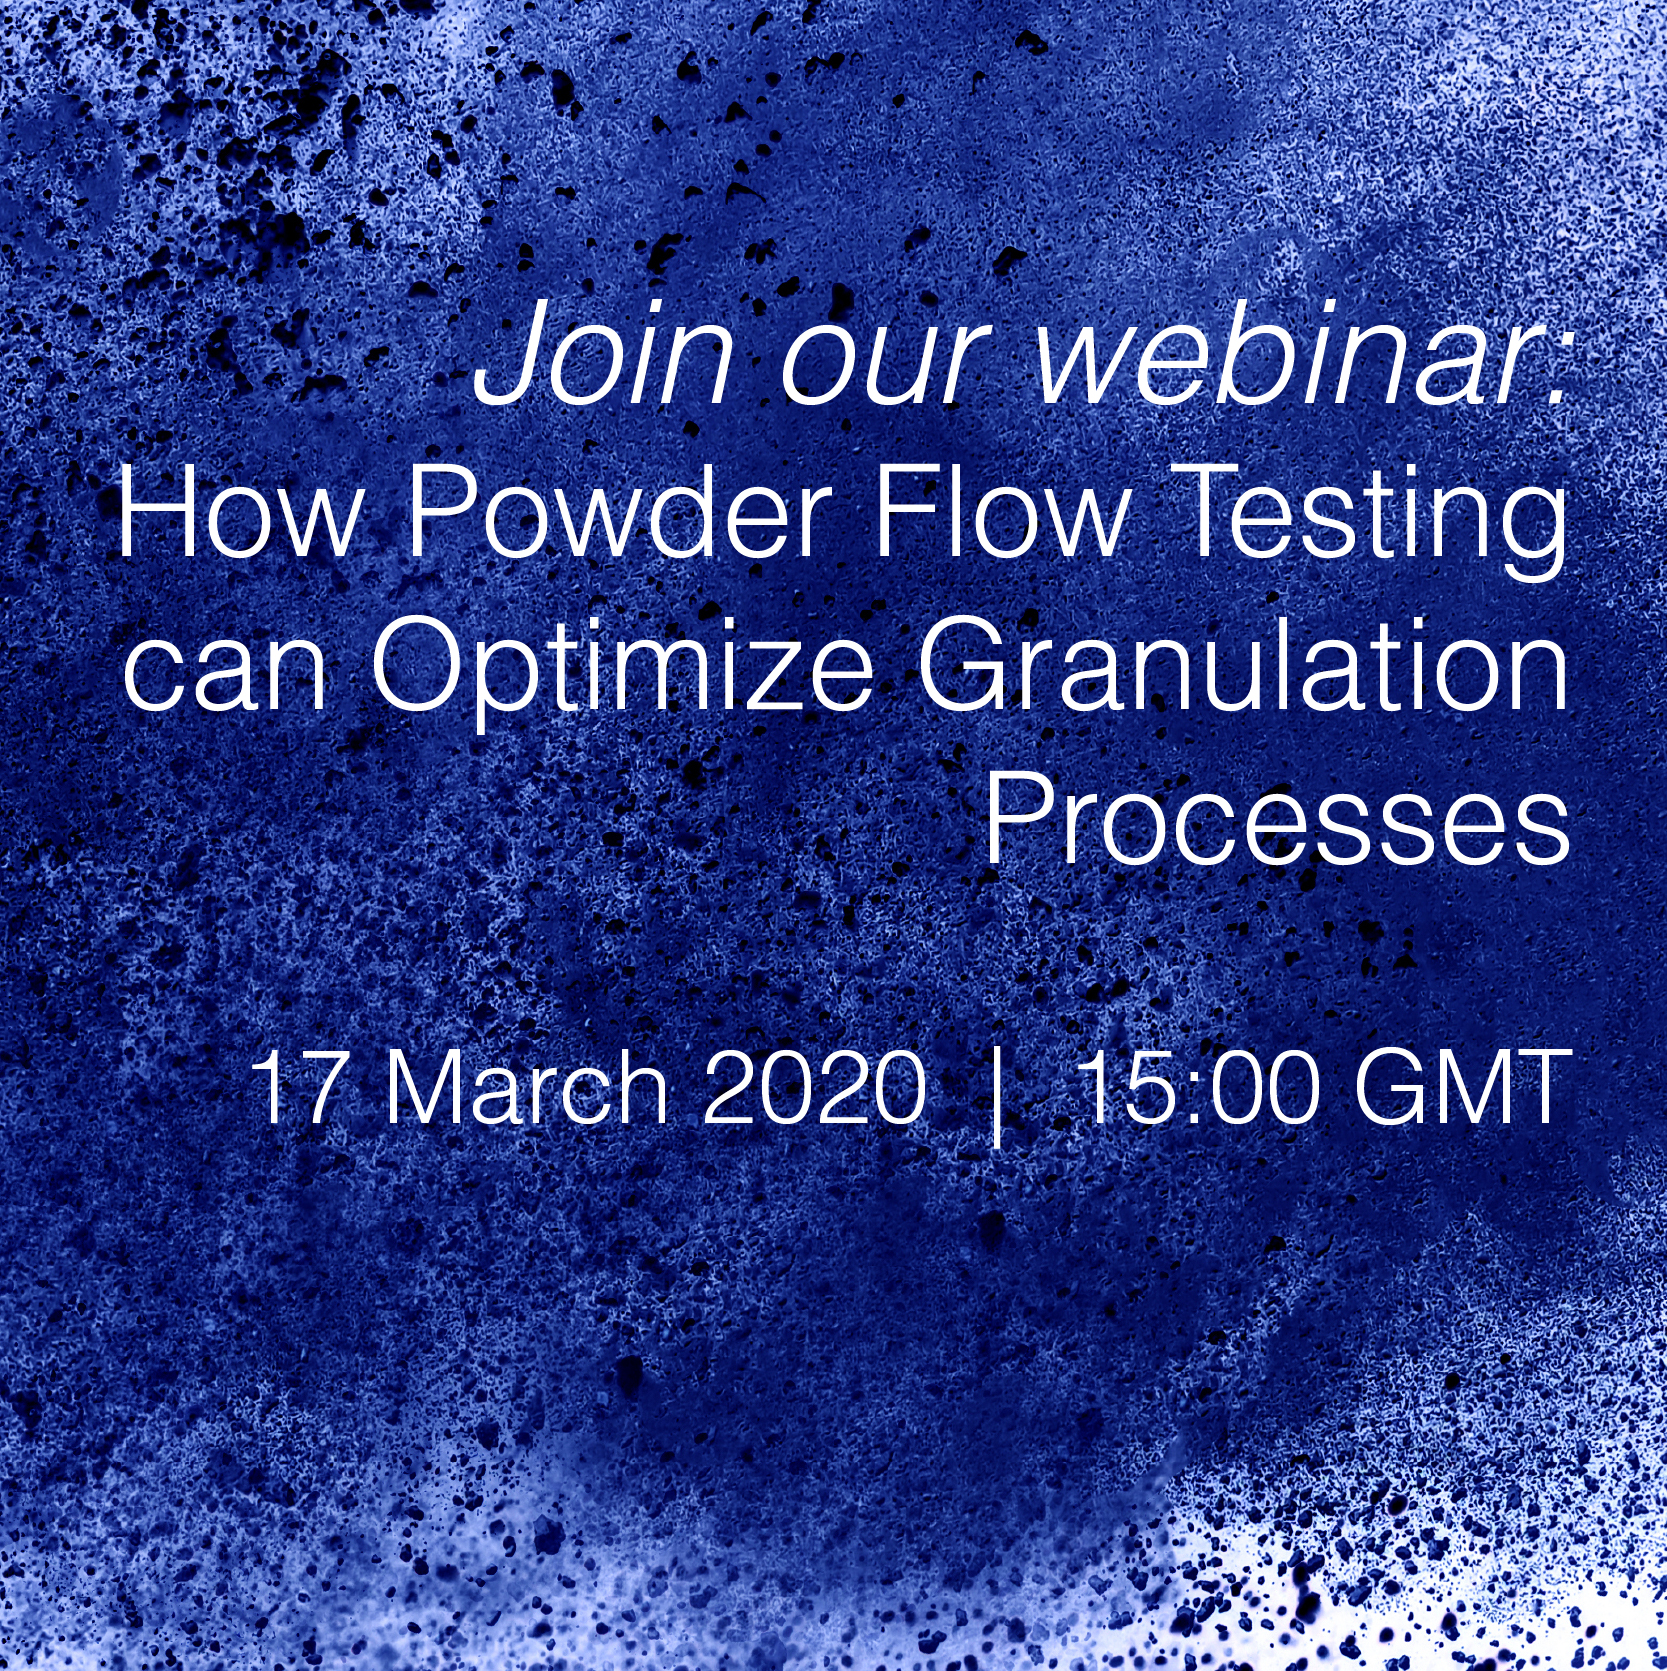 Powder Flow Testing can Optimize Granulation Processes